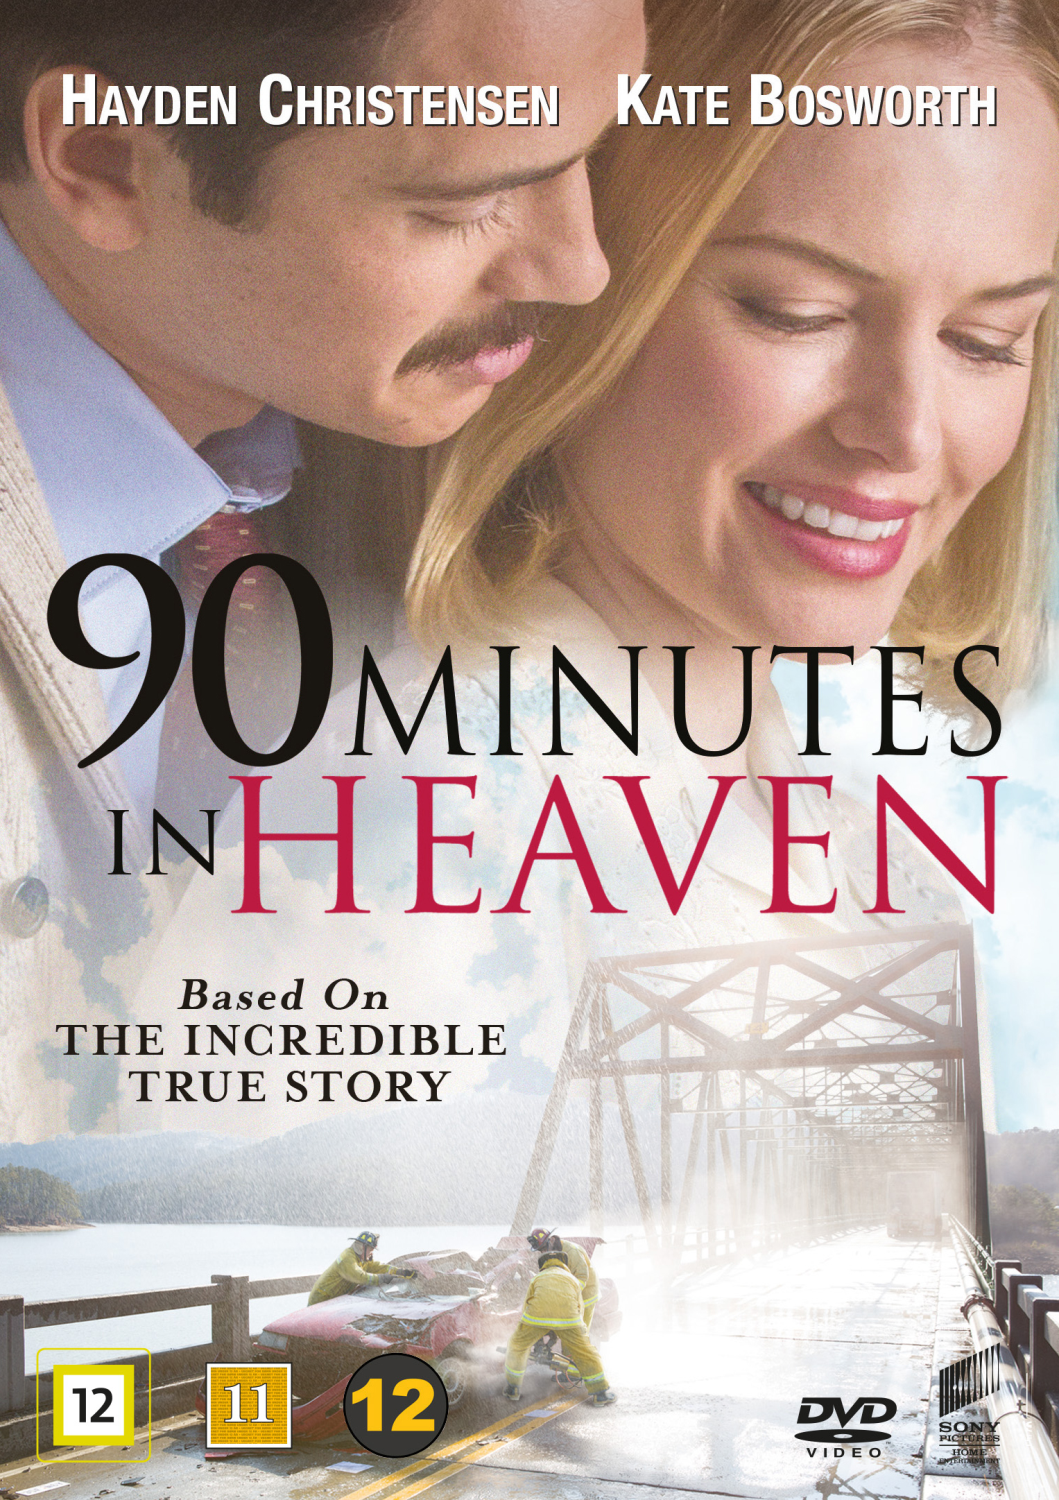 90 Minutes in Heaven (DVD)